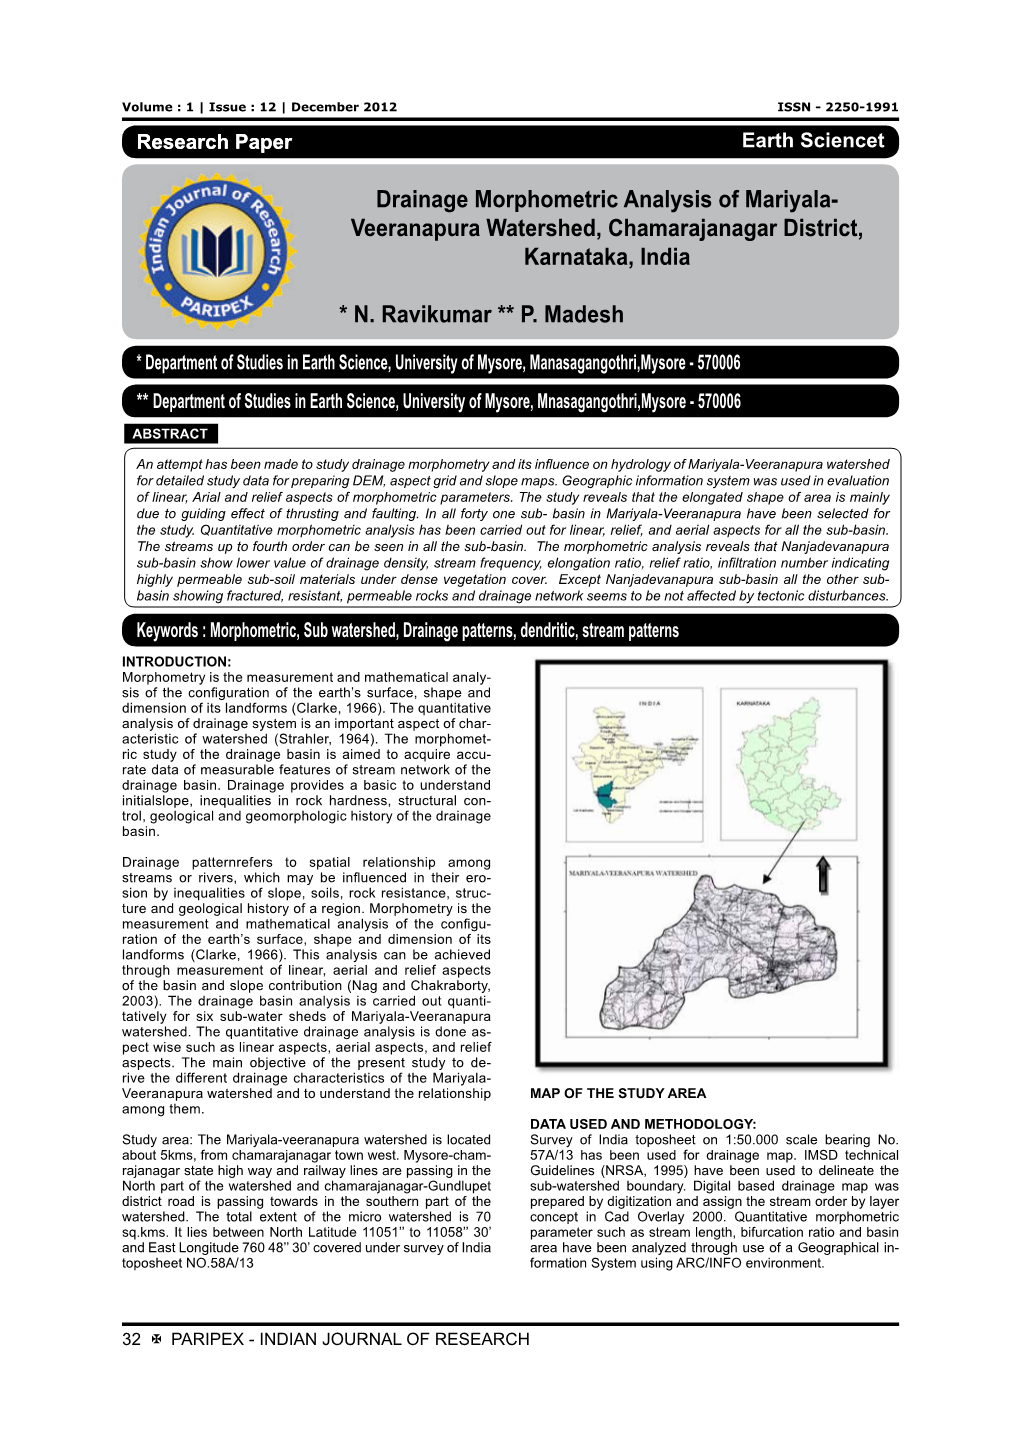 Drainage Morphometric Analysis of Mariyala- Veeranapura Watershed, Chamarajanagar District, Karnataka, India